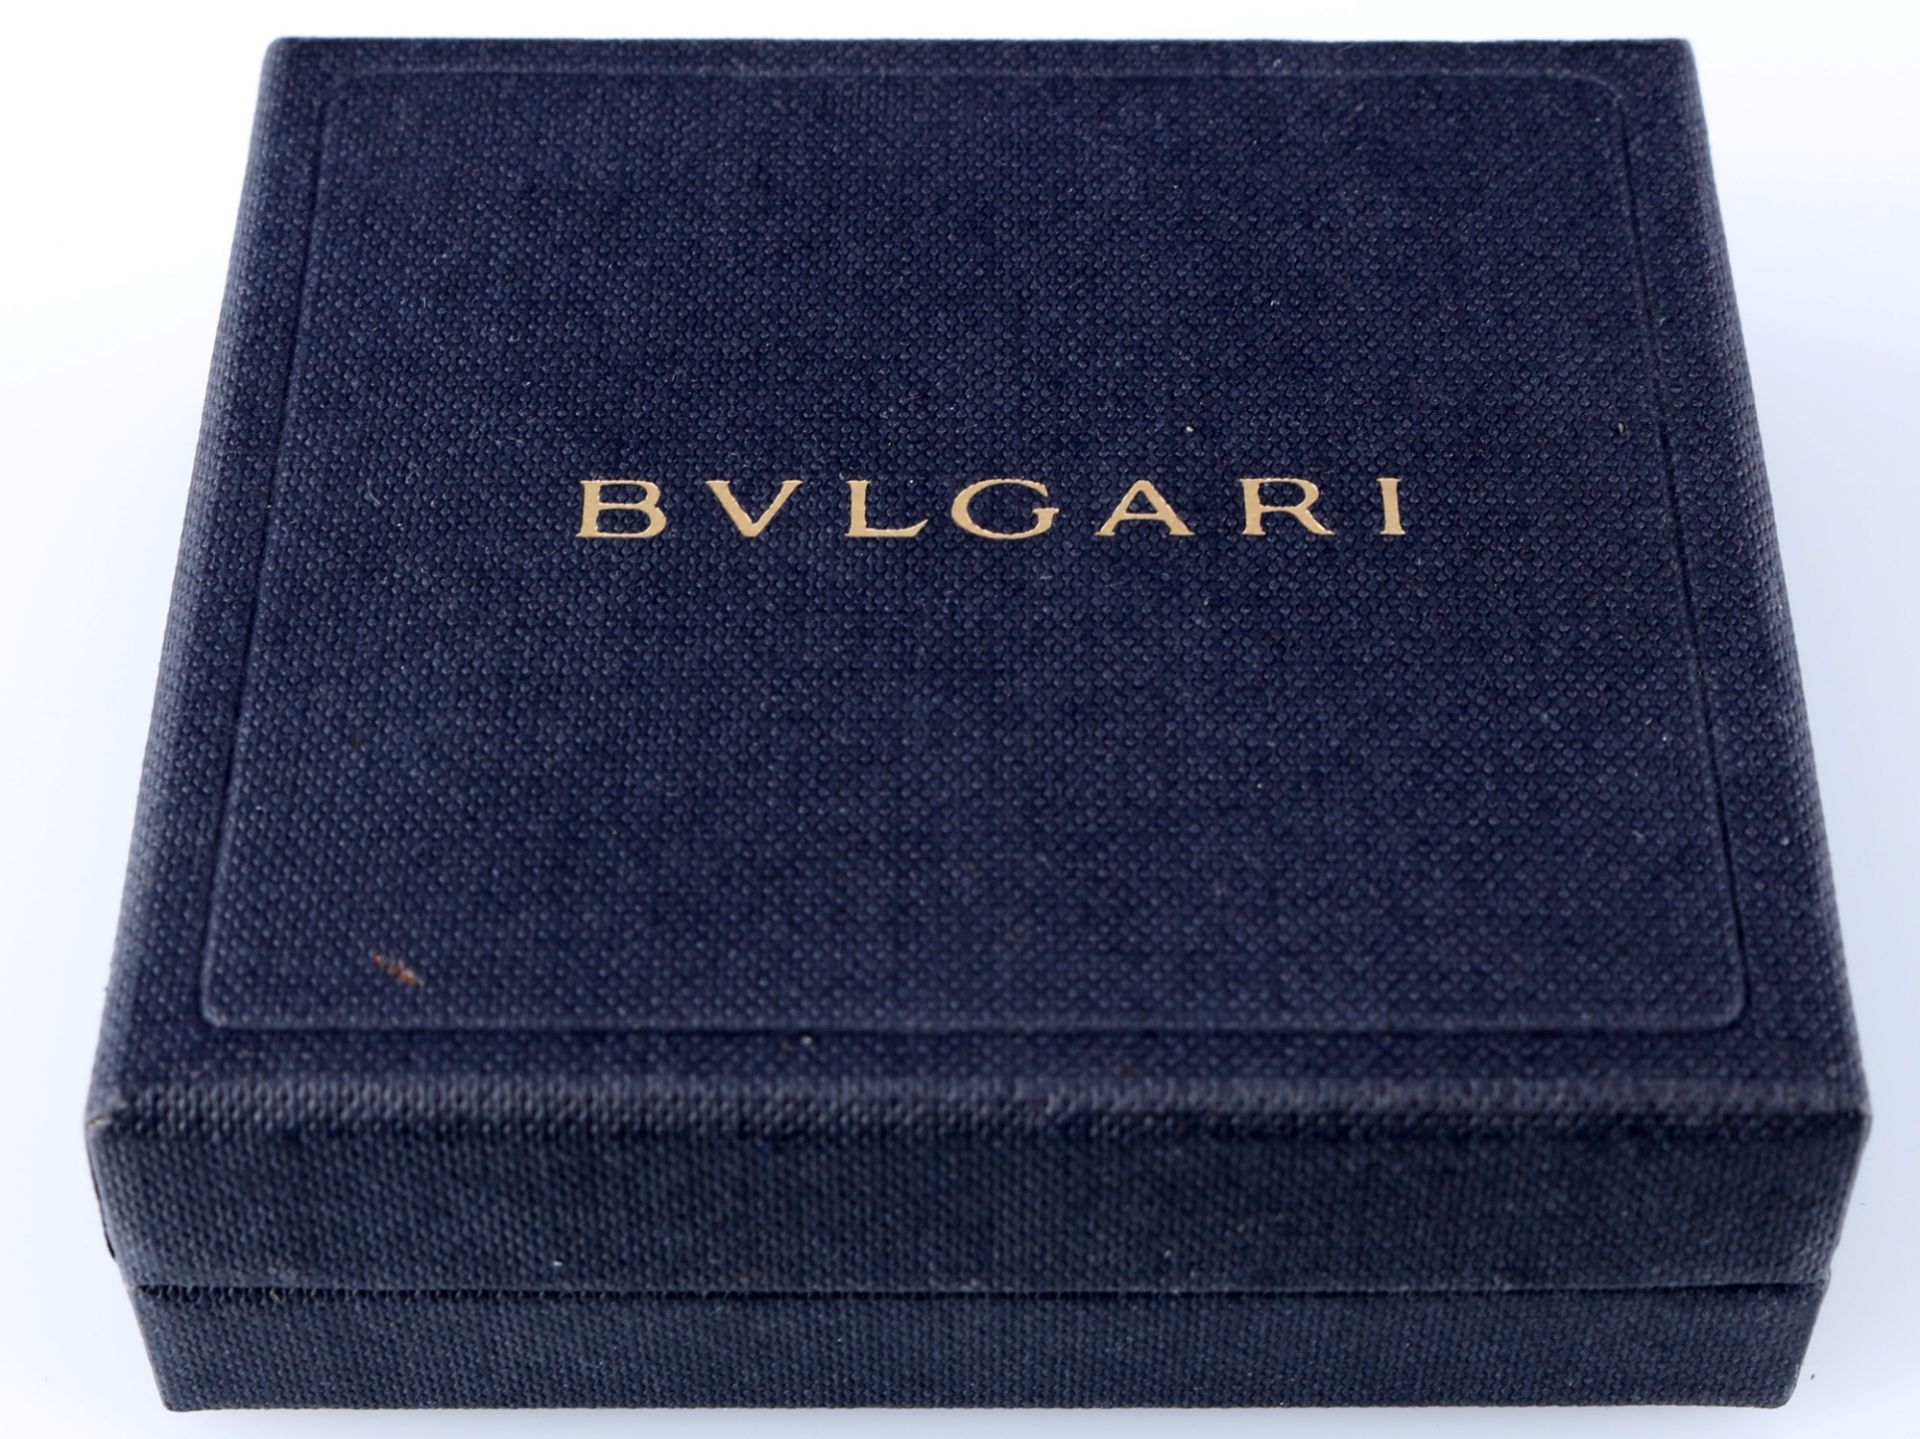 Bulgari 925 silver cufflinks, - Image 4 of 4